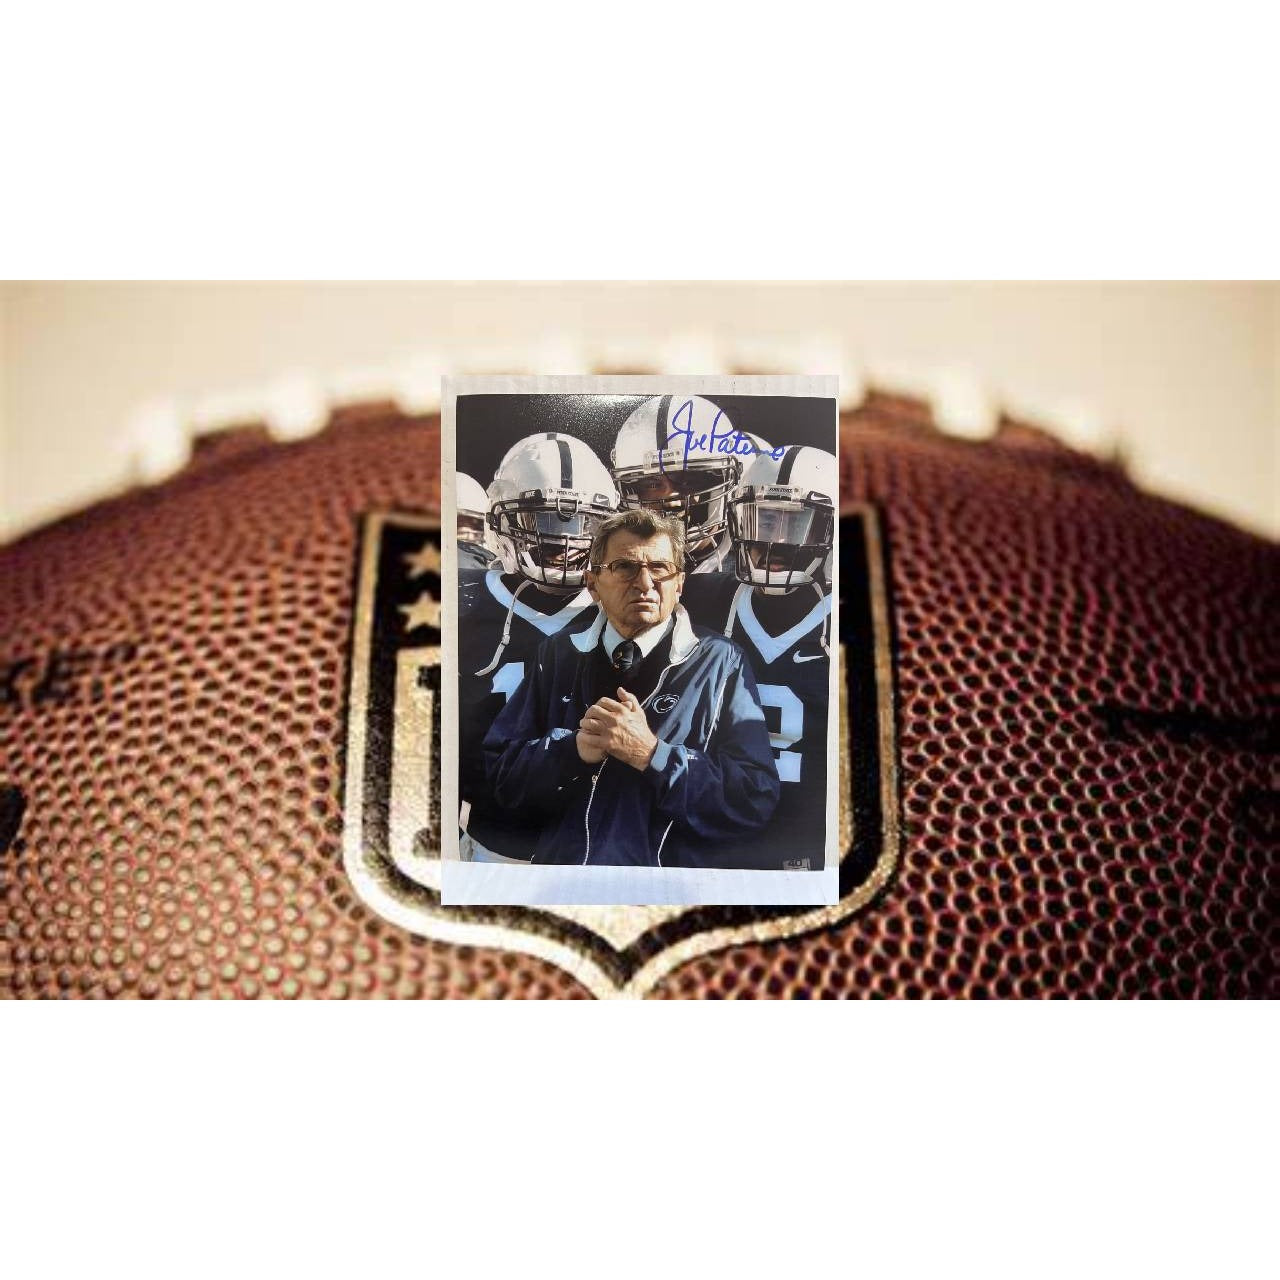 Penn State Nittany Lions Joe Paterno 8x10 photo signed